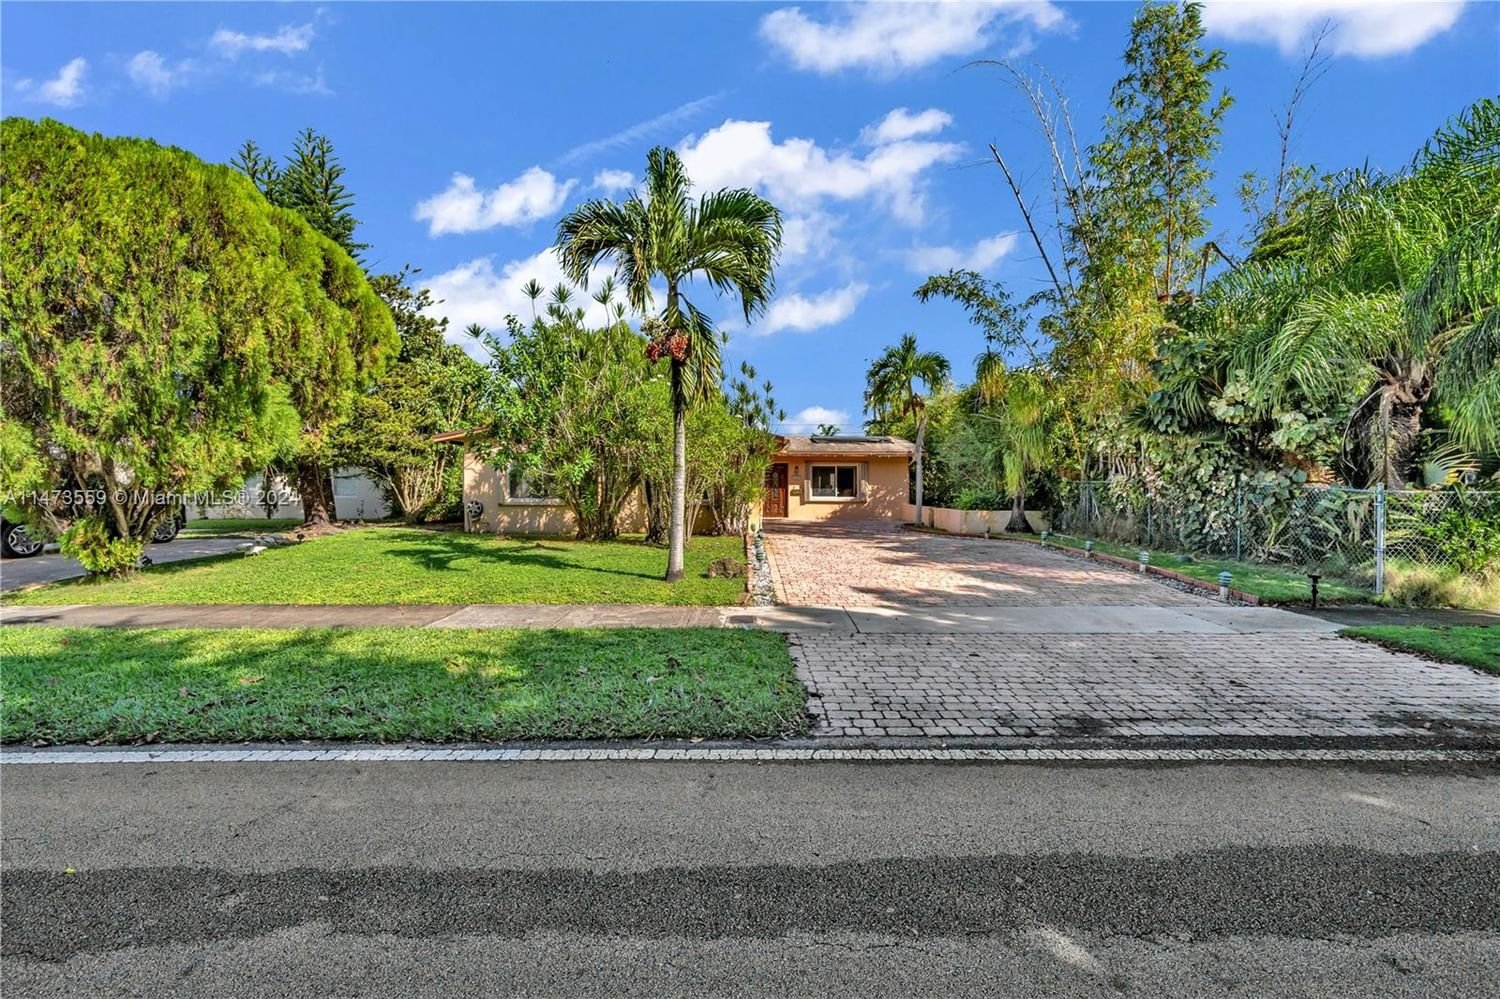 Real estate property located at 6421 36th St, Miami-Dade County, CENTRAL MIAMI PART 2, Miami, FL